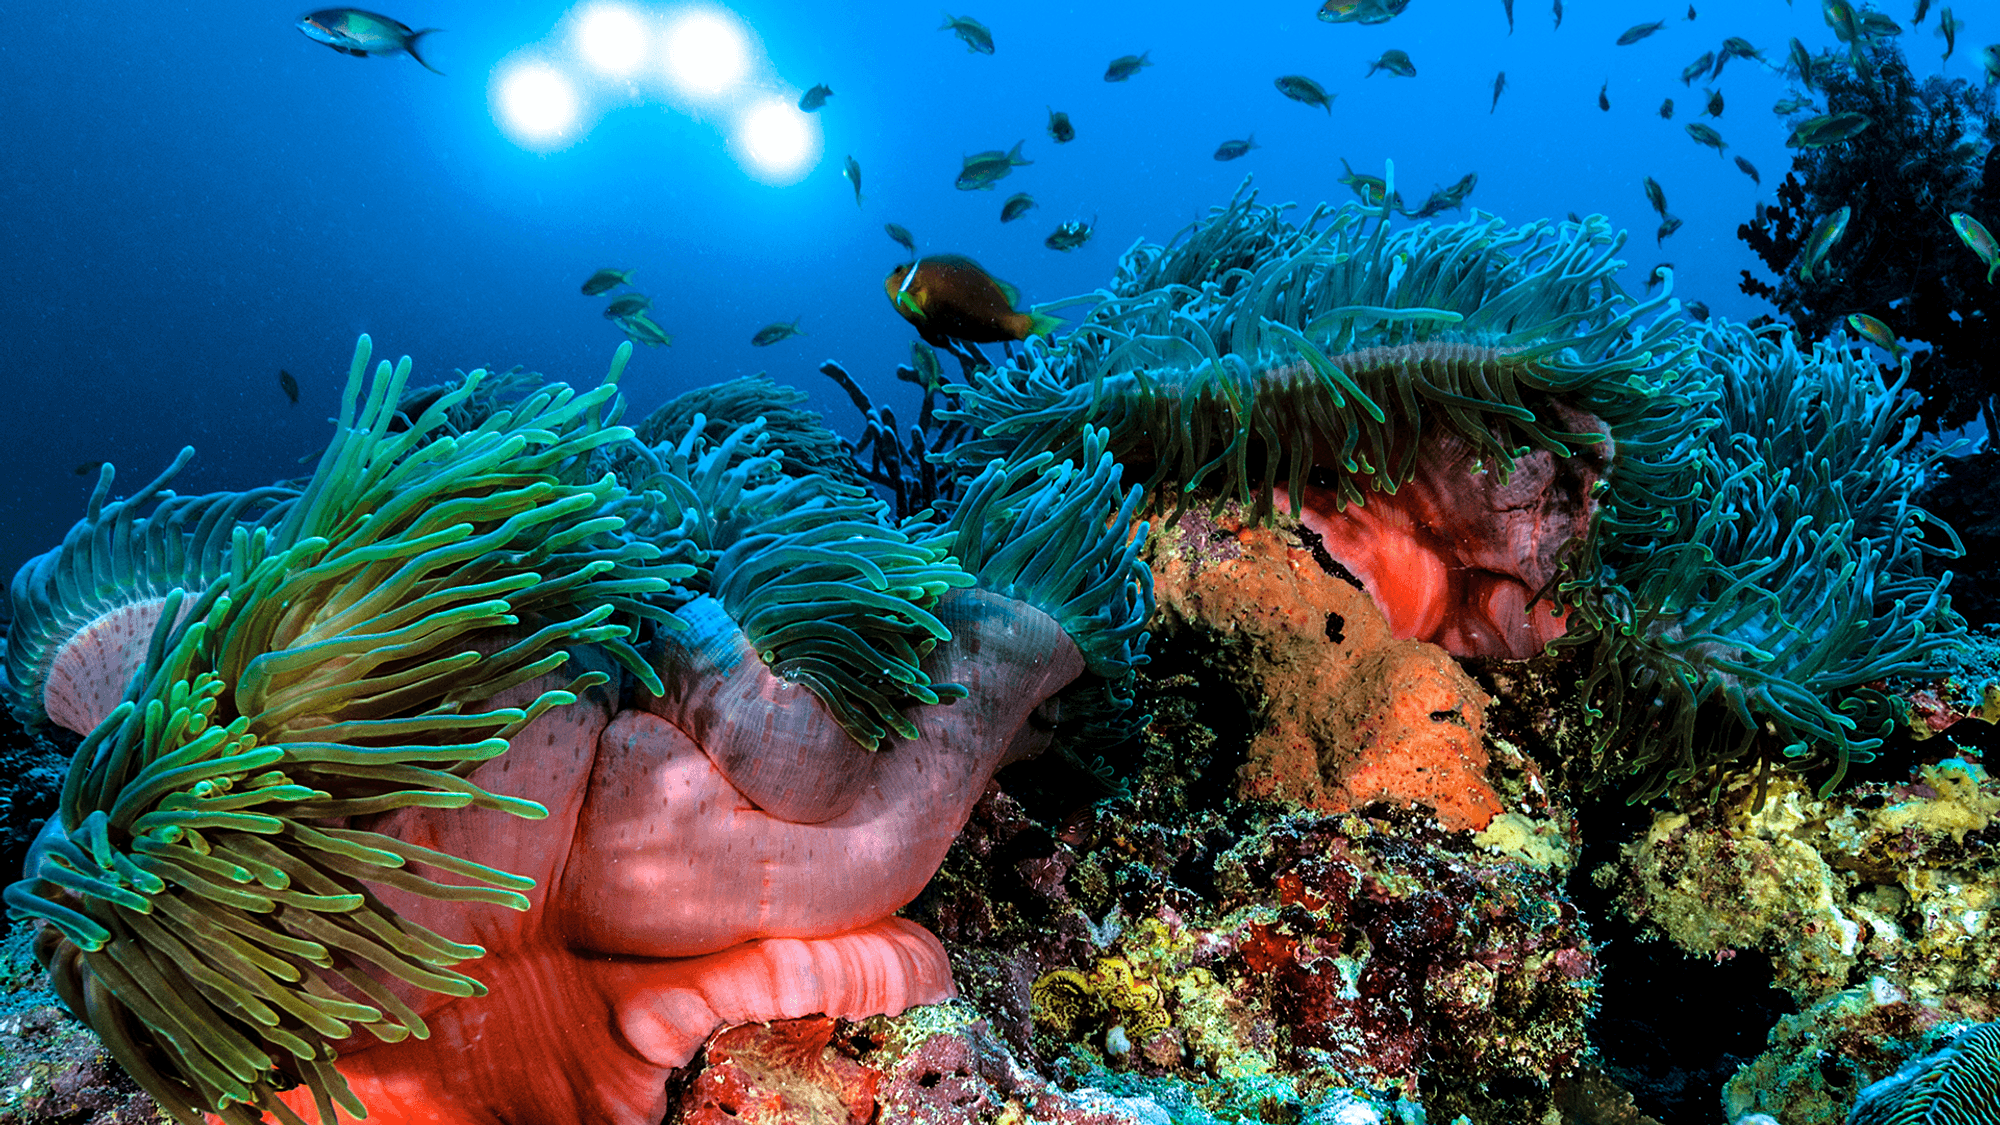 The underwater world of Maldives